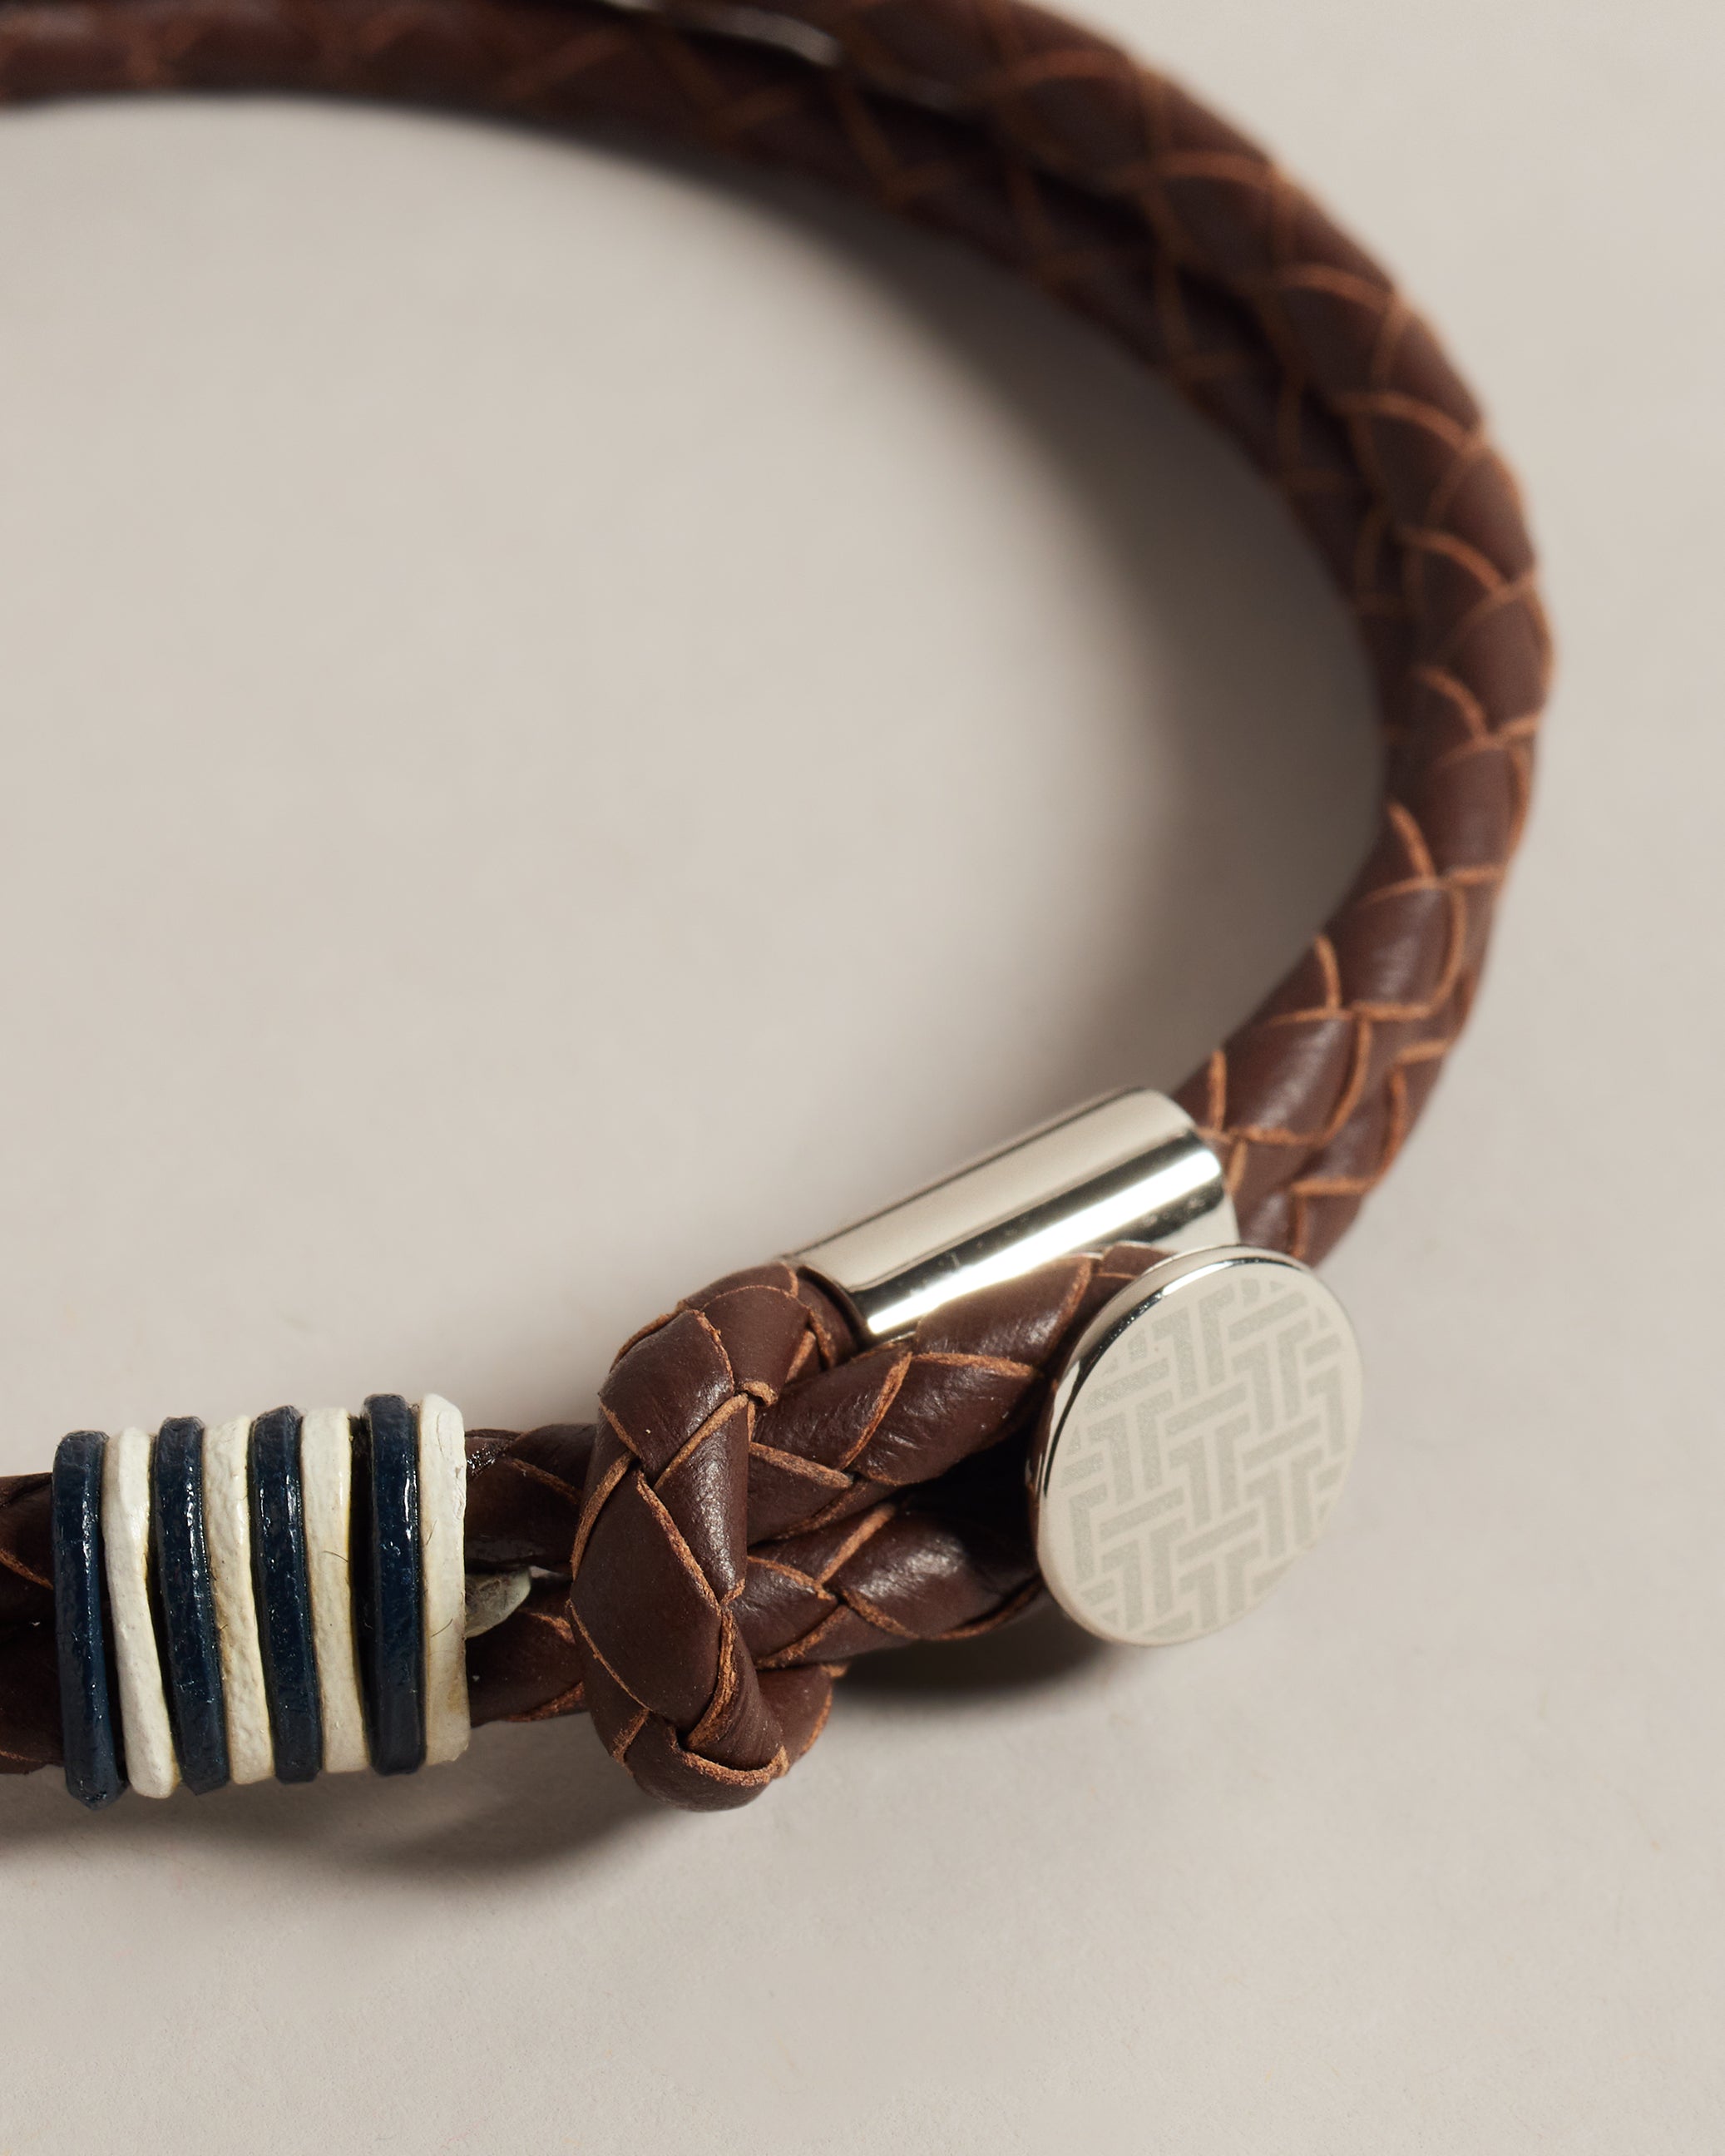 Coen Woven Leather Double Strap Bracelet Stone